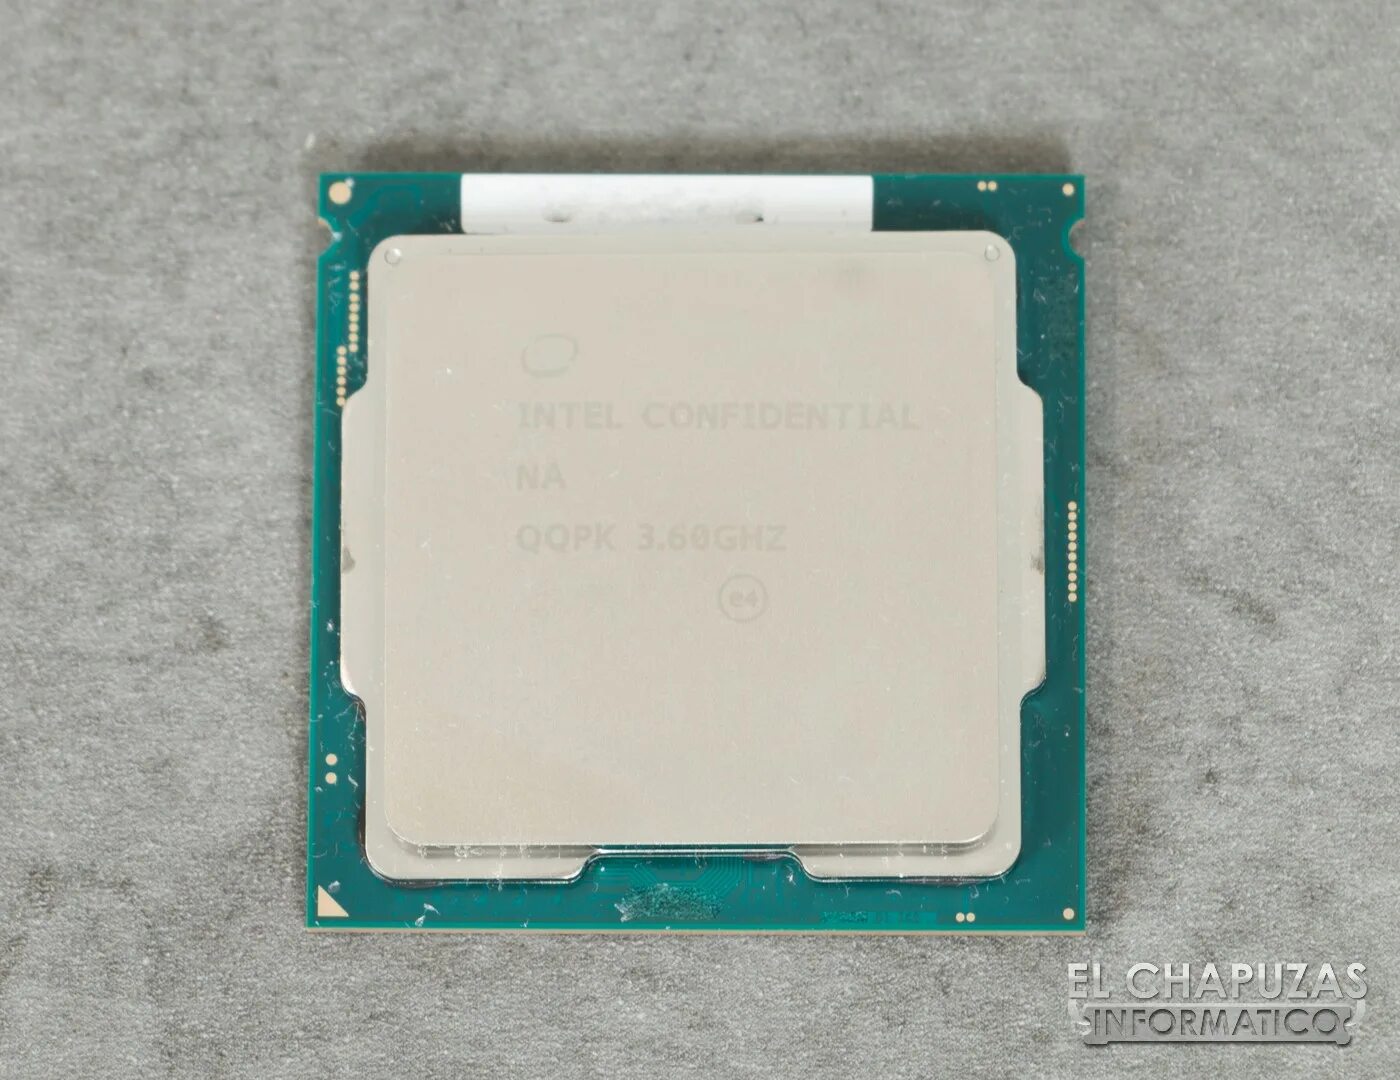 Intel Core i7-9700k. Процессор Intel Core i7 12700k. Процессор Intel Core i7 12700 Box. Восьмиядерный процессор Intel Core i7. Процессор intel core 12700